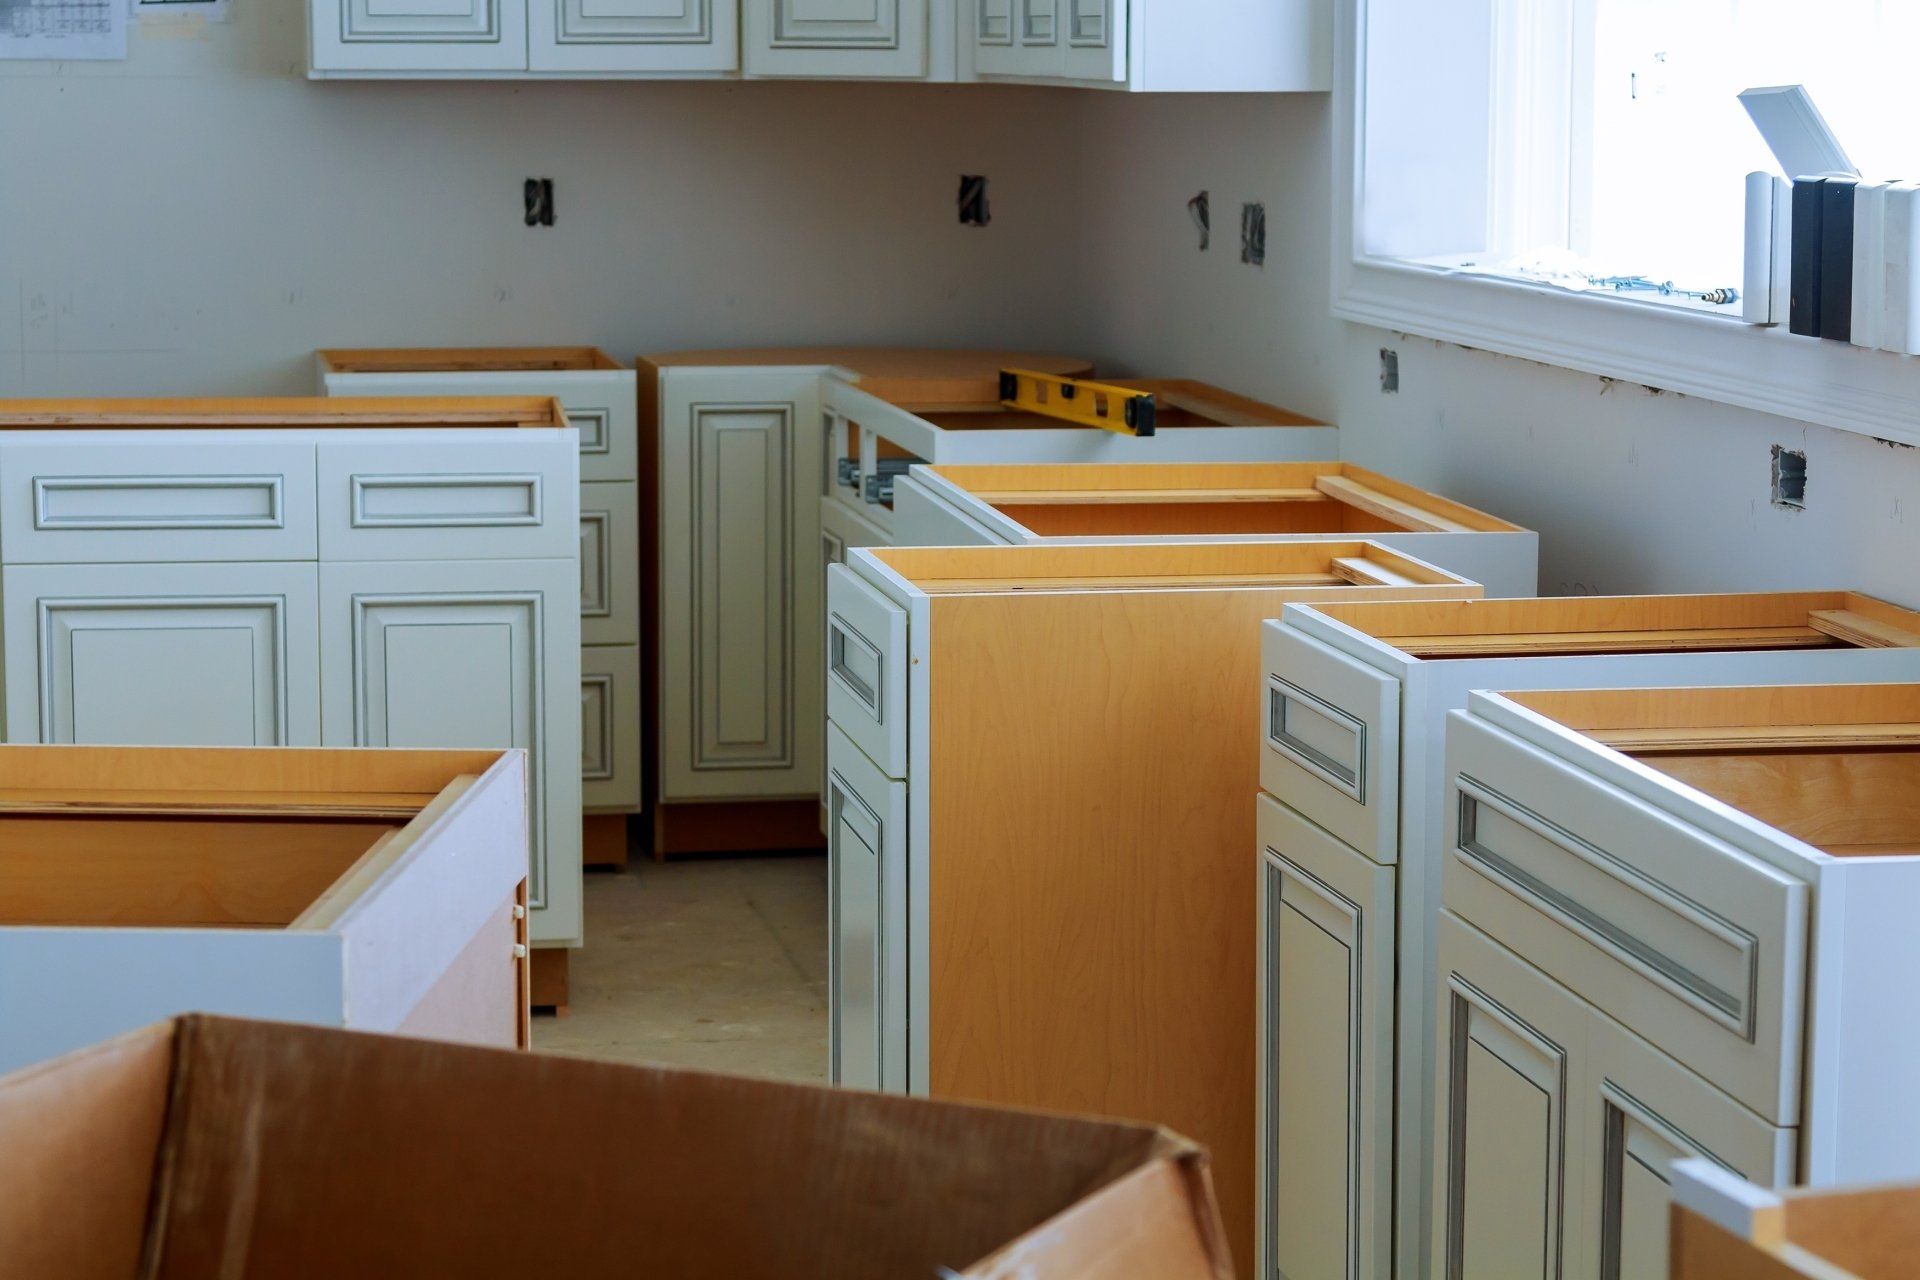 Installation of custom kitchen cabinets